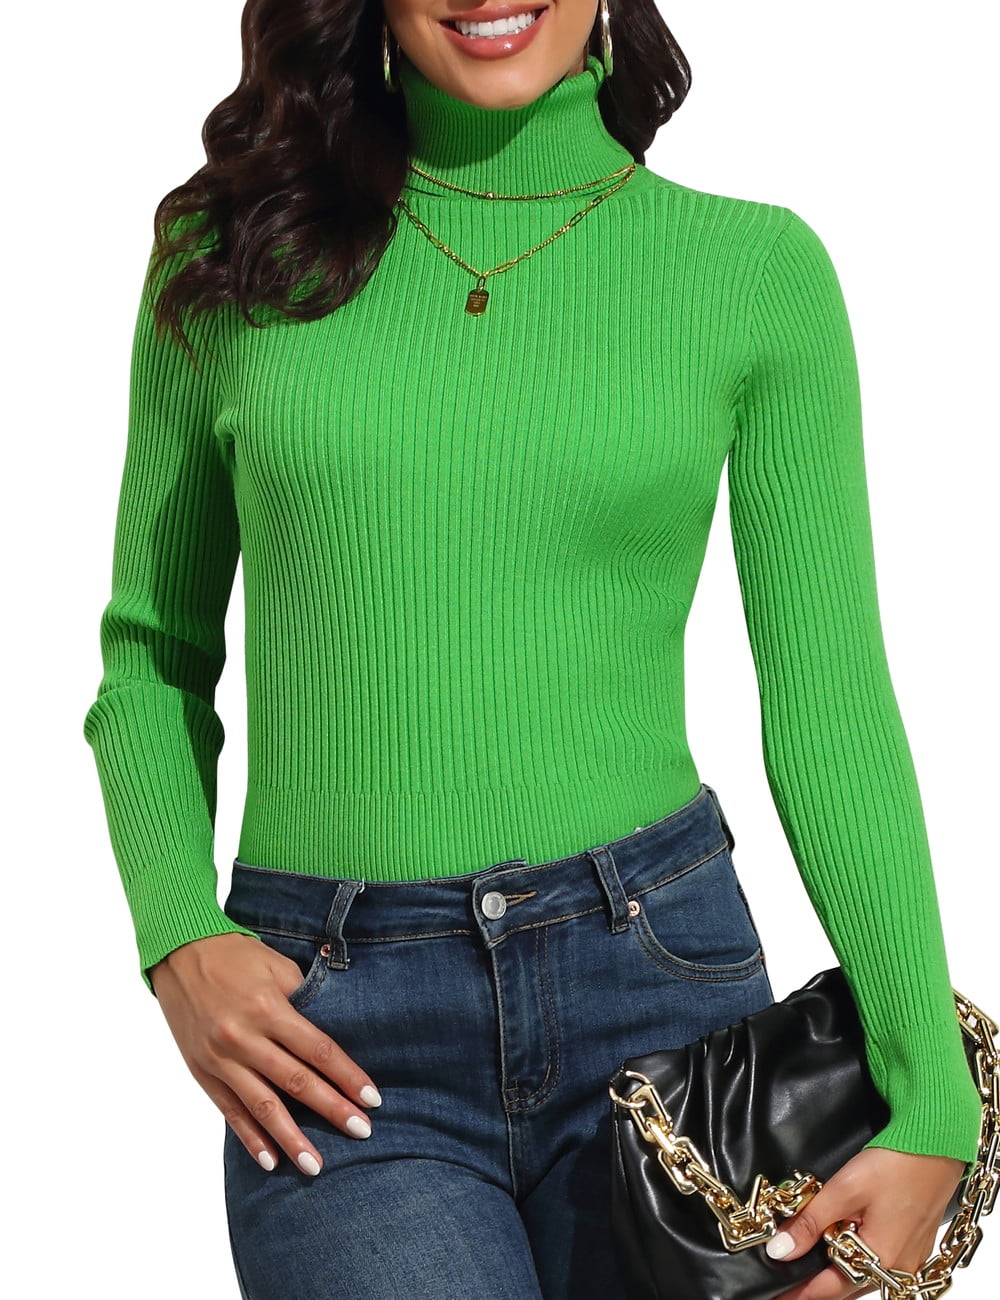 PrettyGuide Women's Ribbed Turtleneck Long Sleeve Sweater